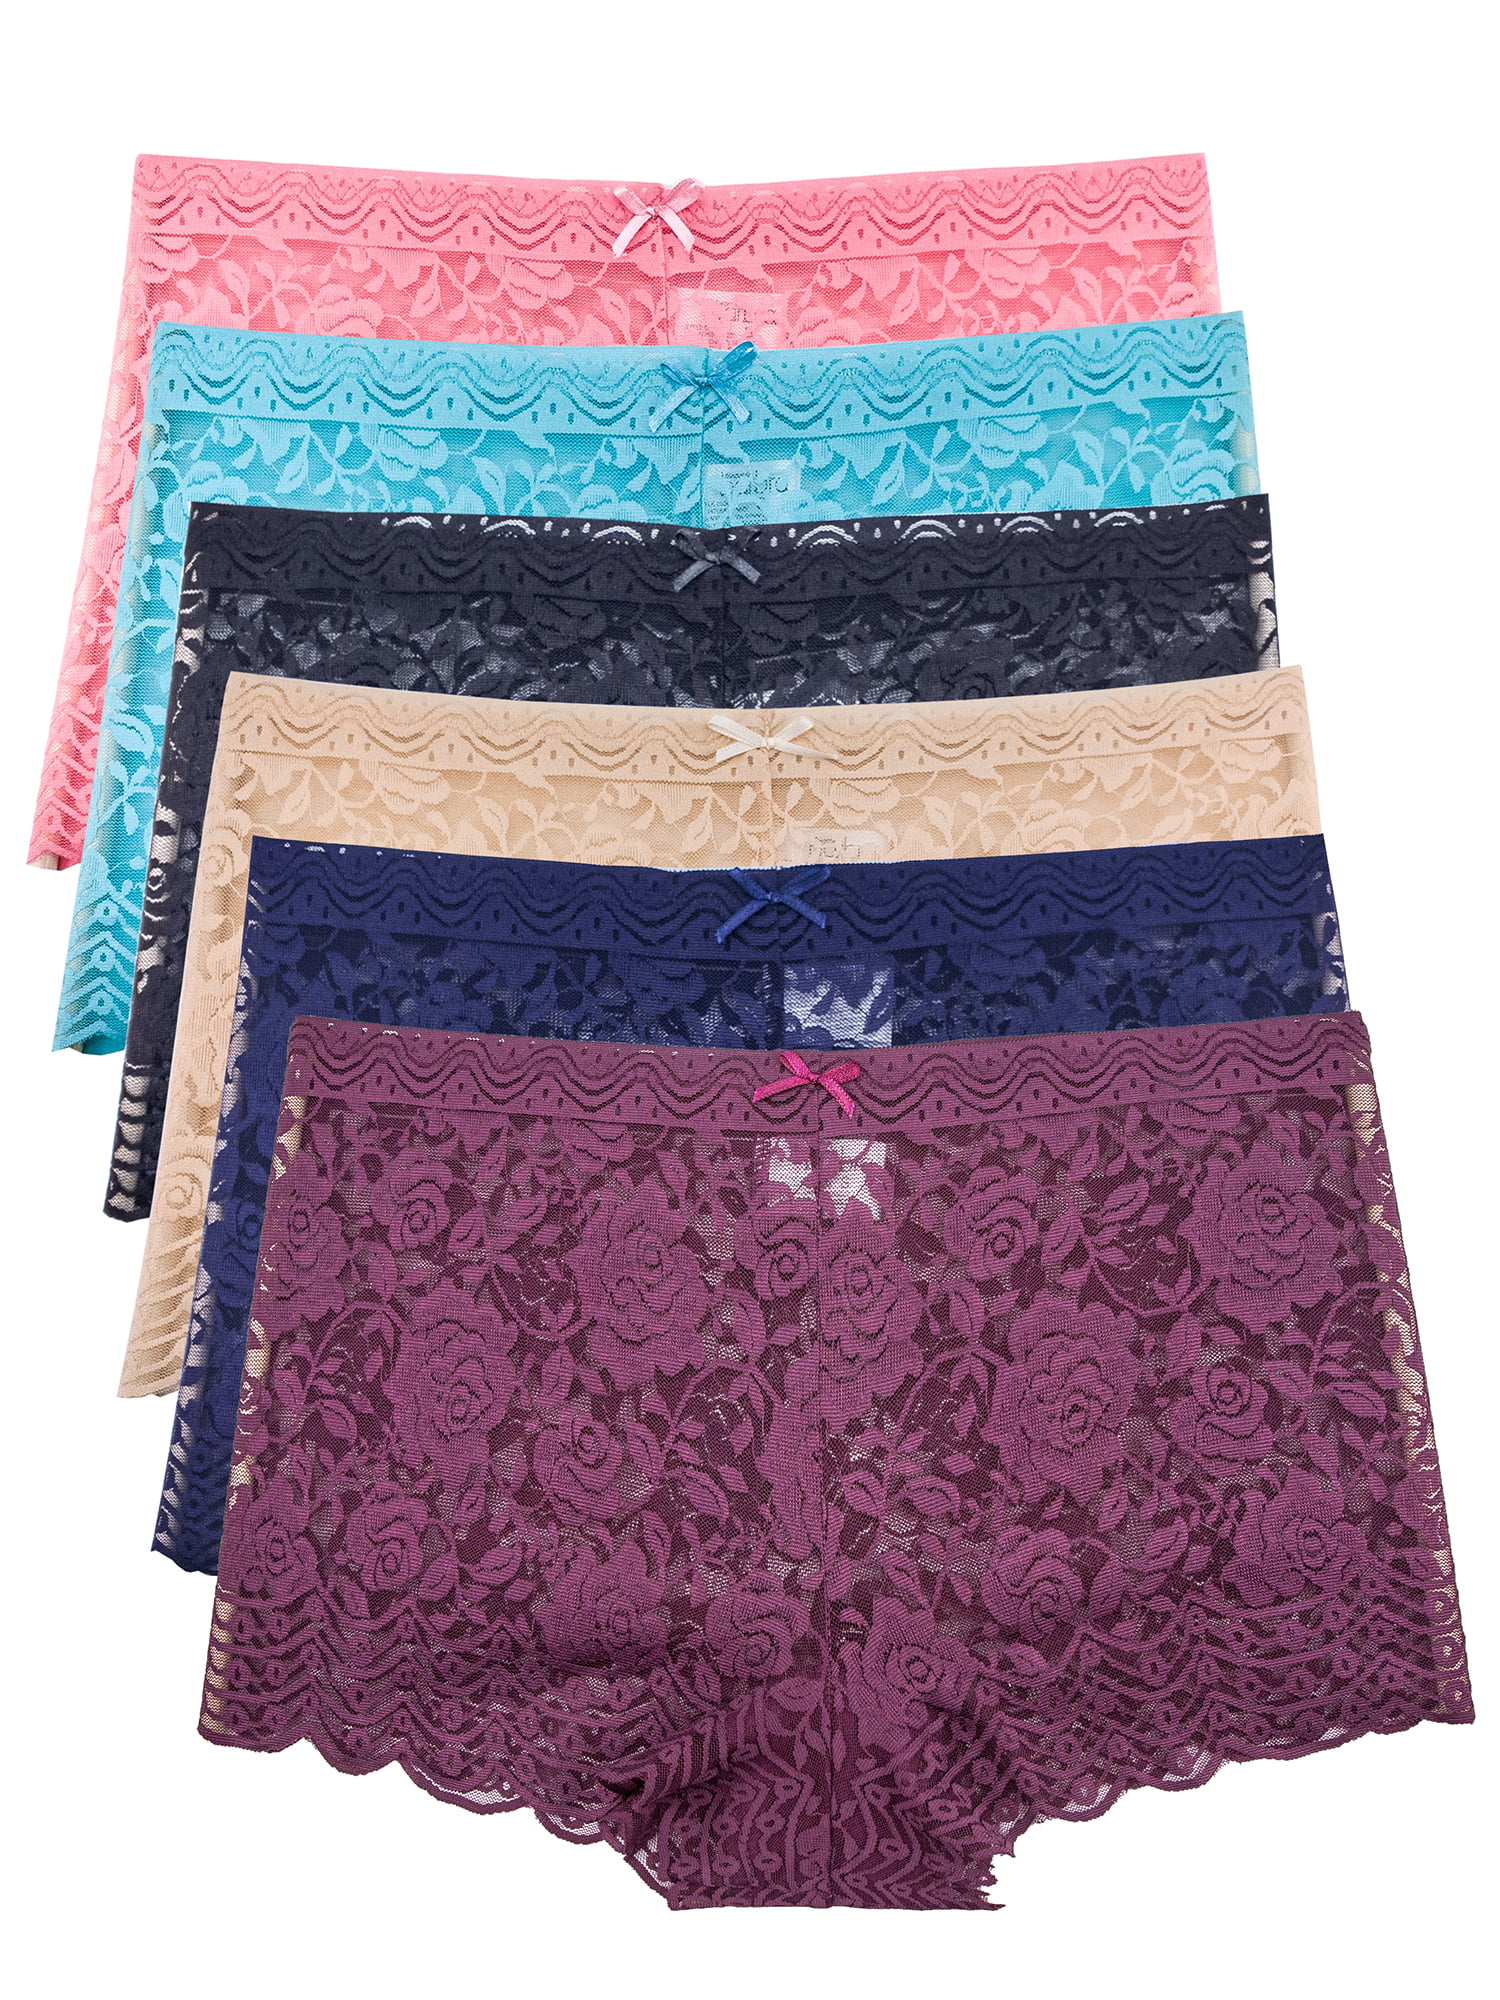 Barbra Women's Lace Boy Shorts Panties Regular & Plus Size Multi-Pack